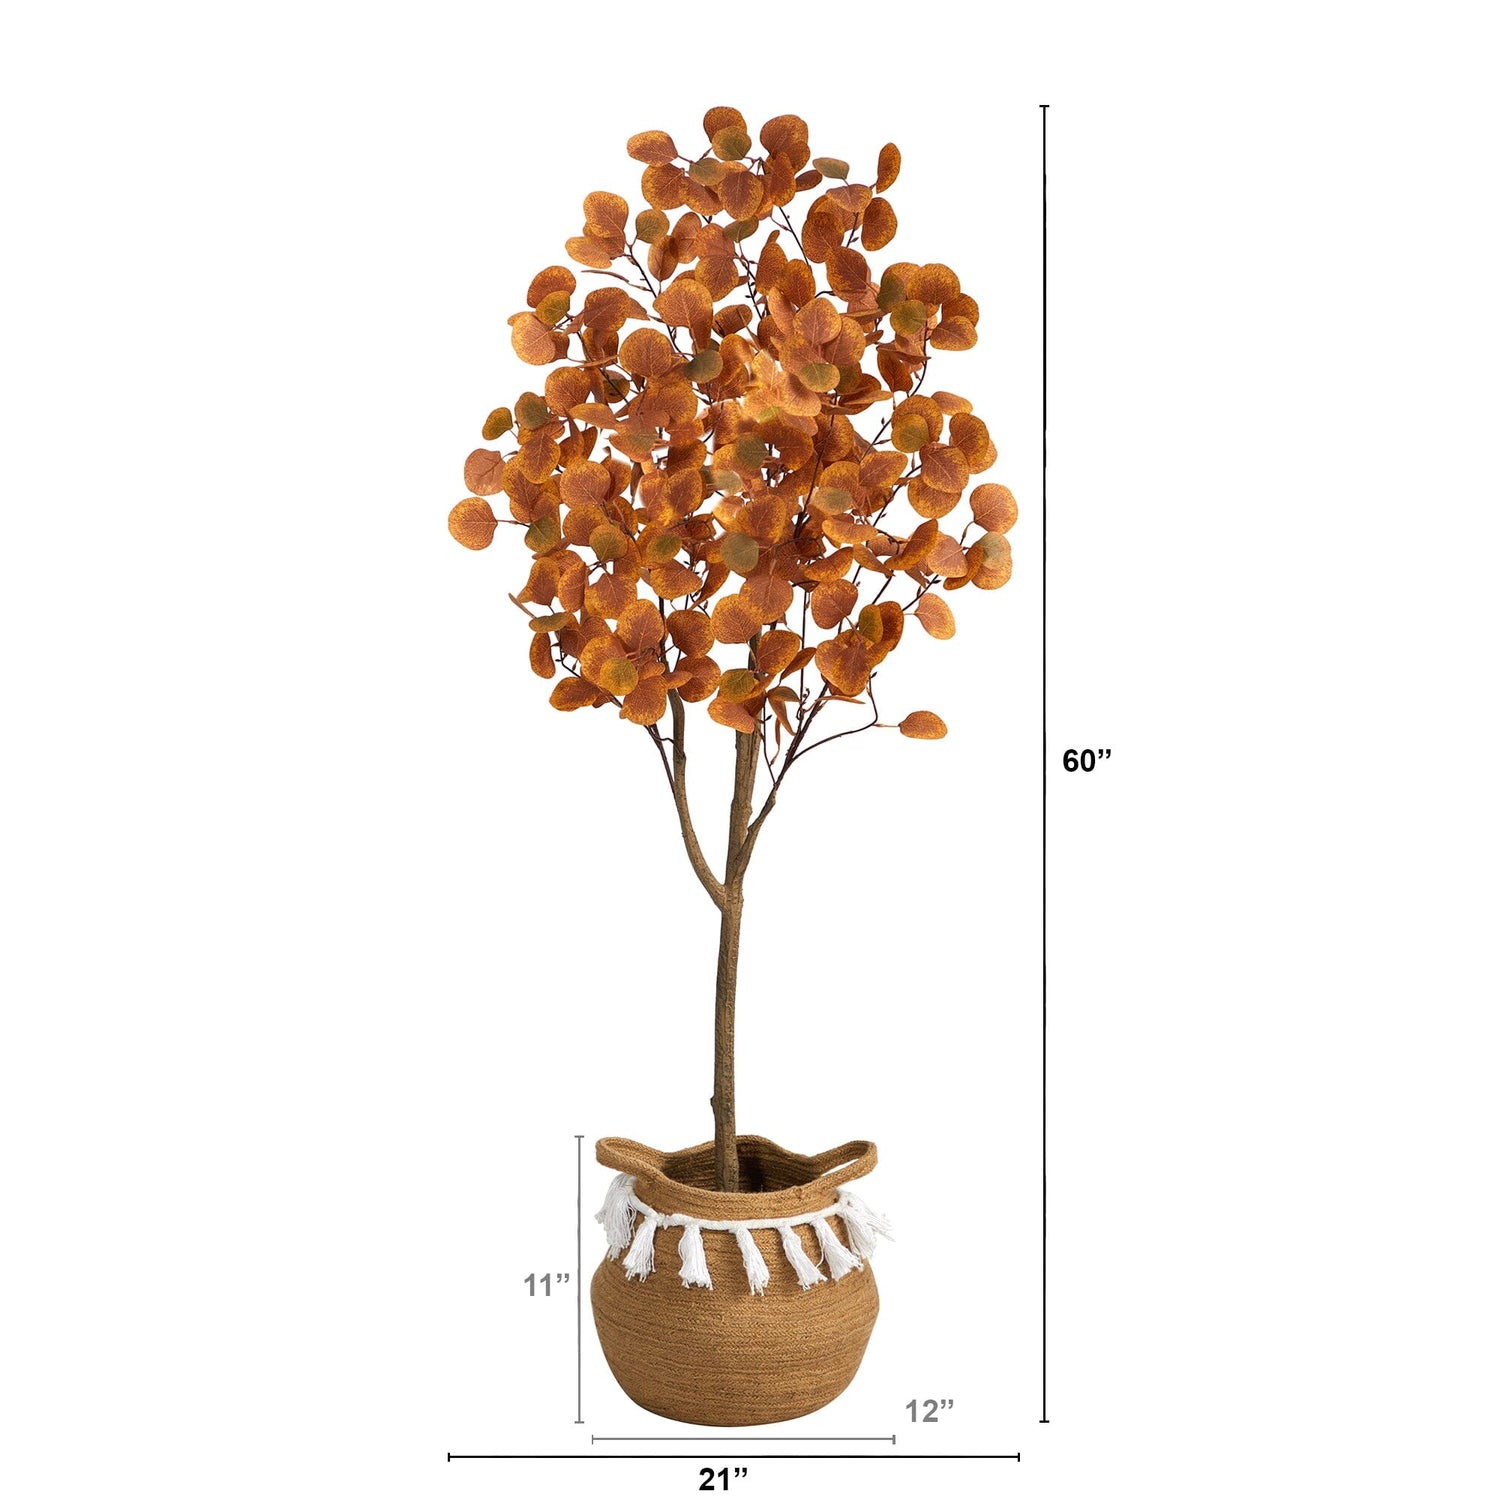 5’ Artificial Autumn Eucalyptus Tree with Handmade Jute & Cotton Basket with Tassels